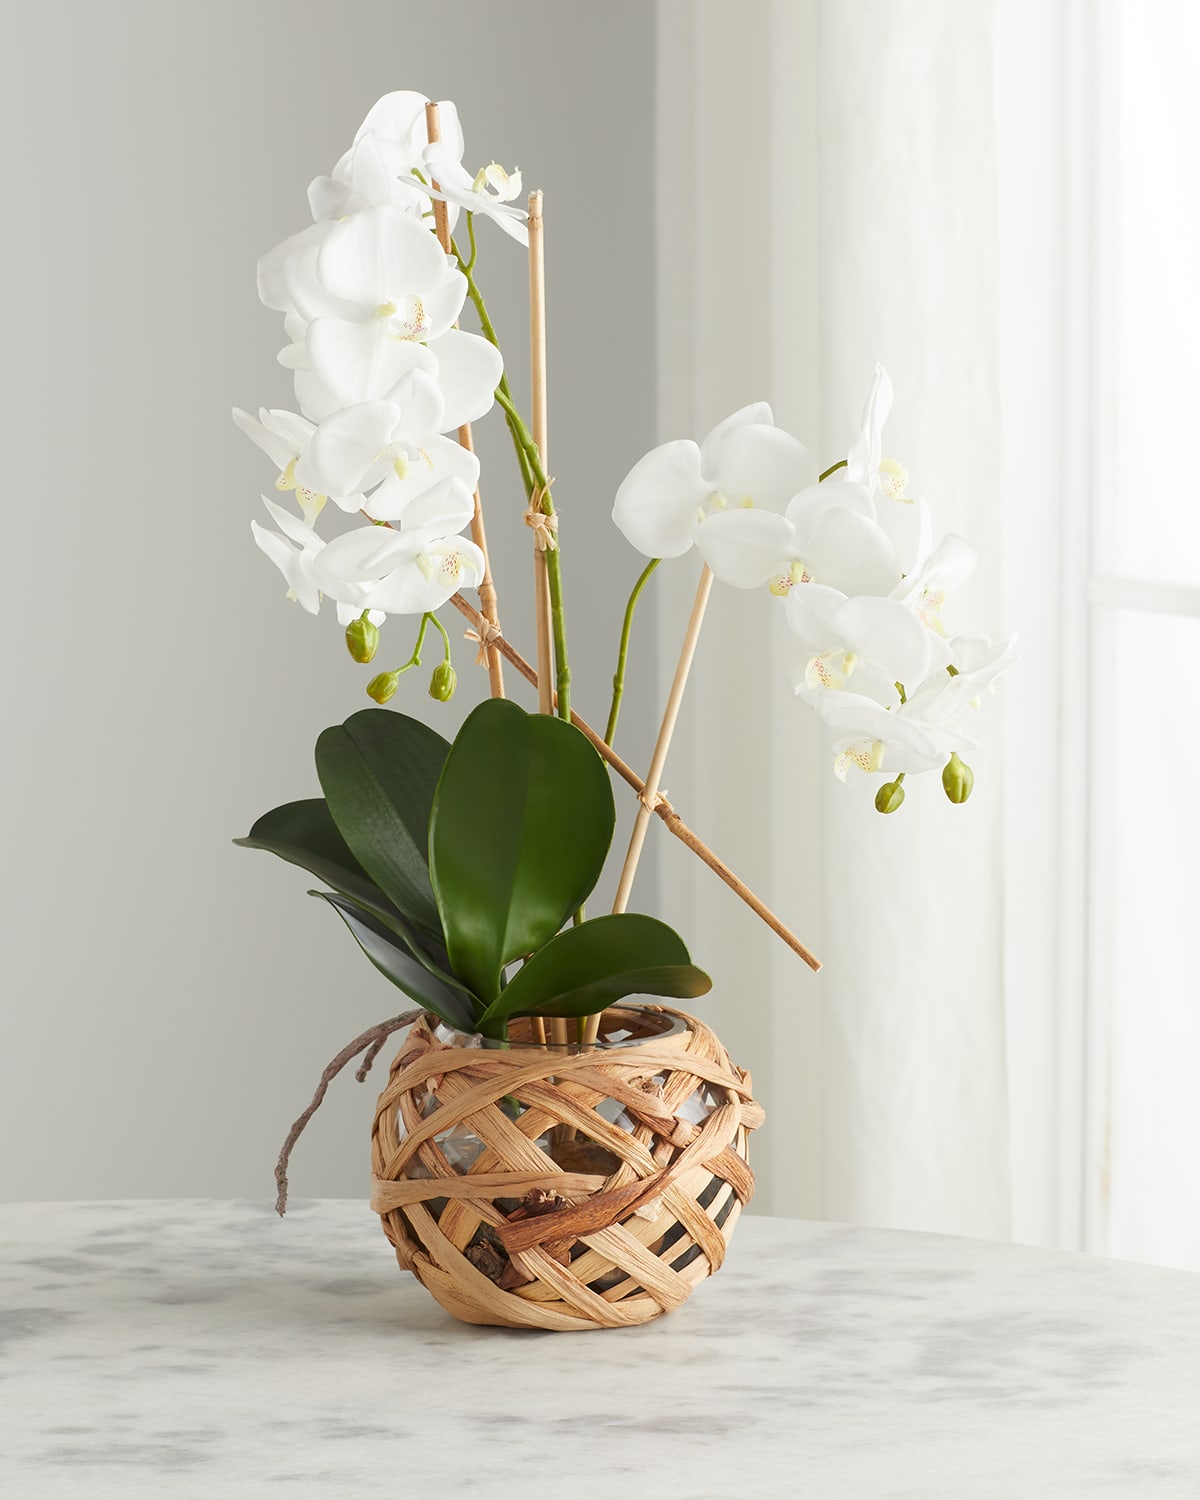 Orchids 24" Faux Floral Arrangement in Rattan-Wrapped Glass Vase